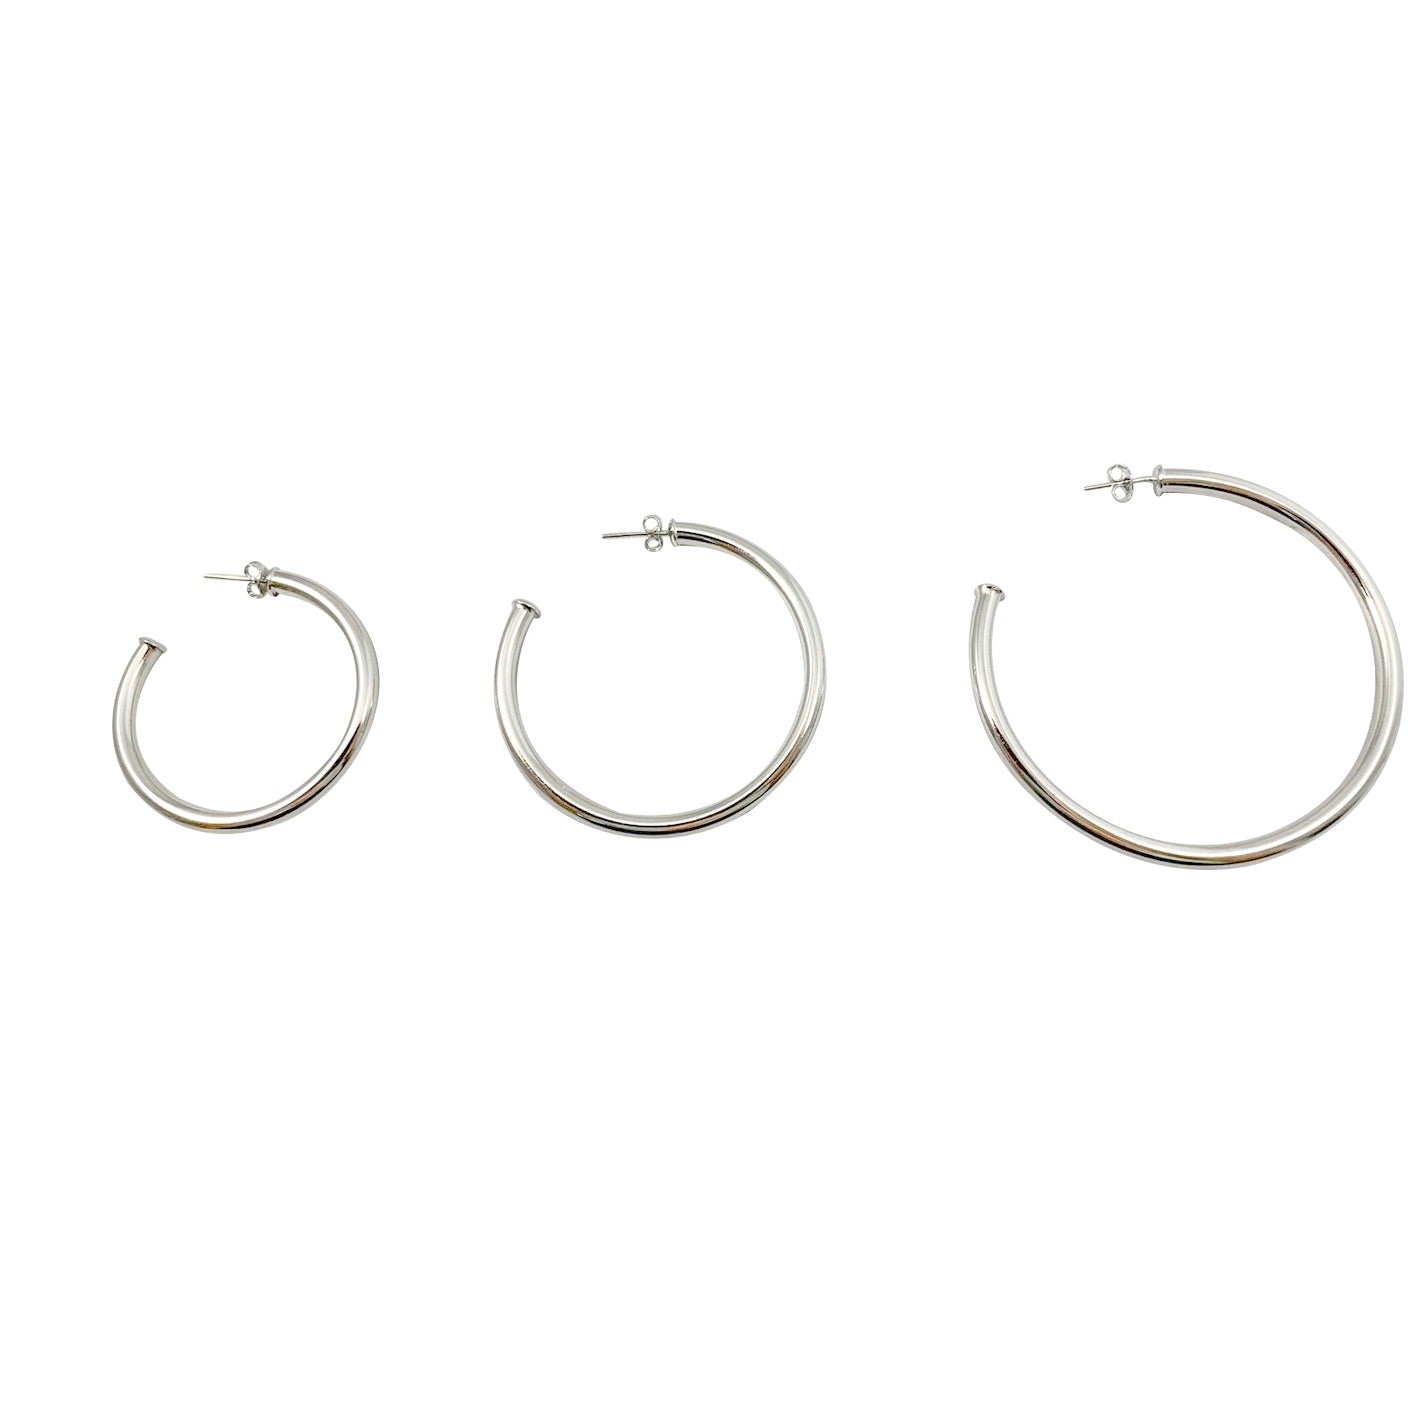 Celine 2.5 ” White Gold Hoops - NOA - Earrings